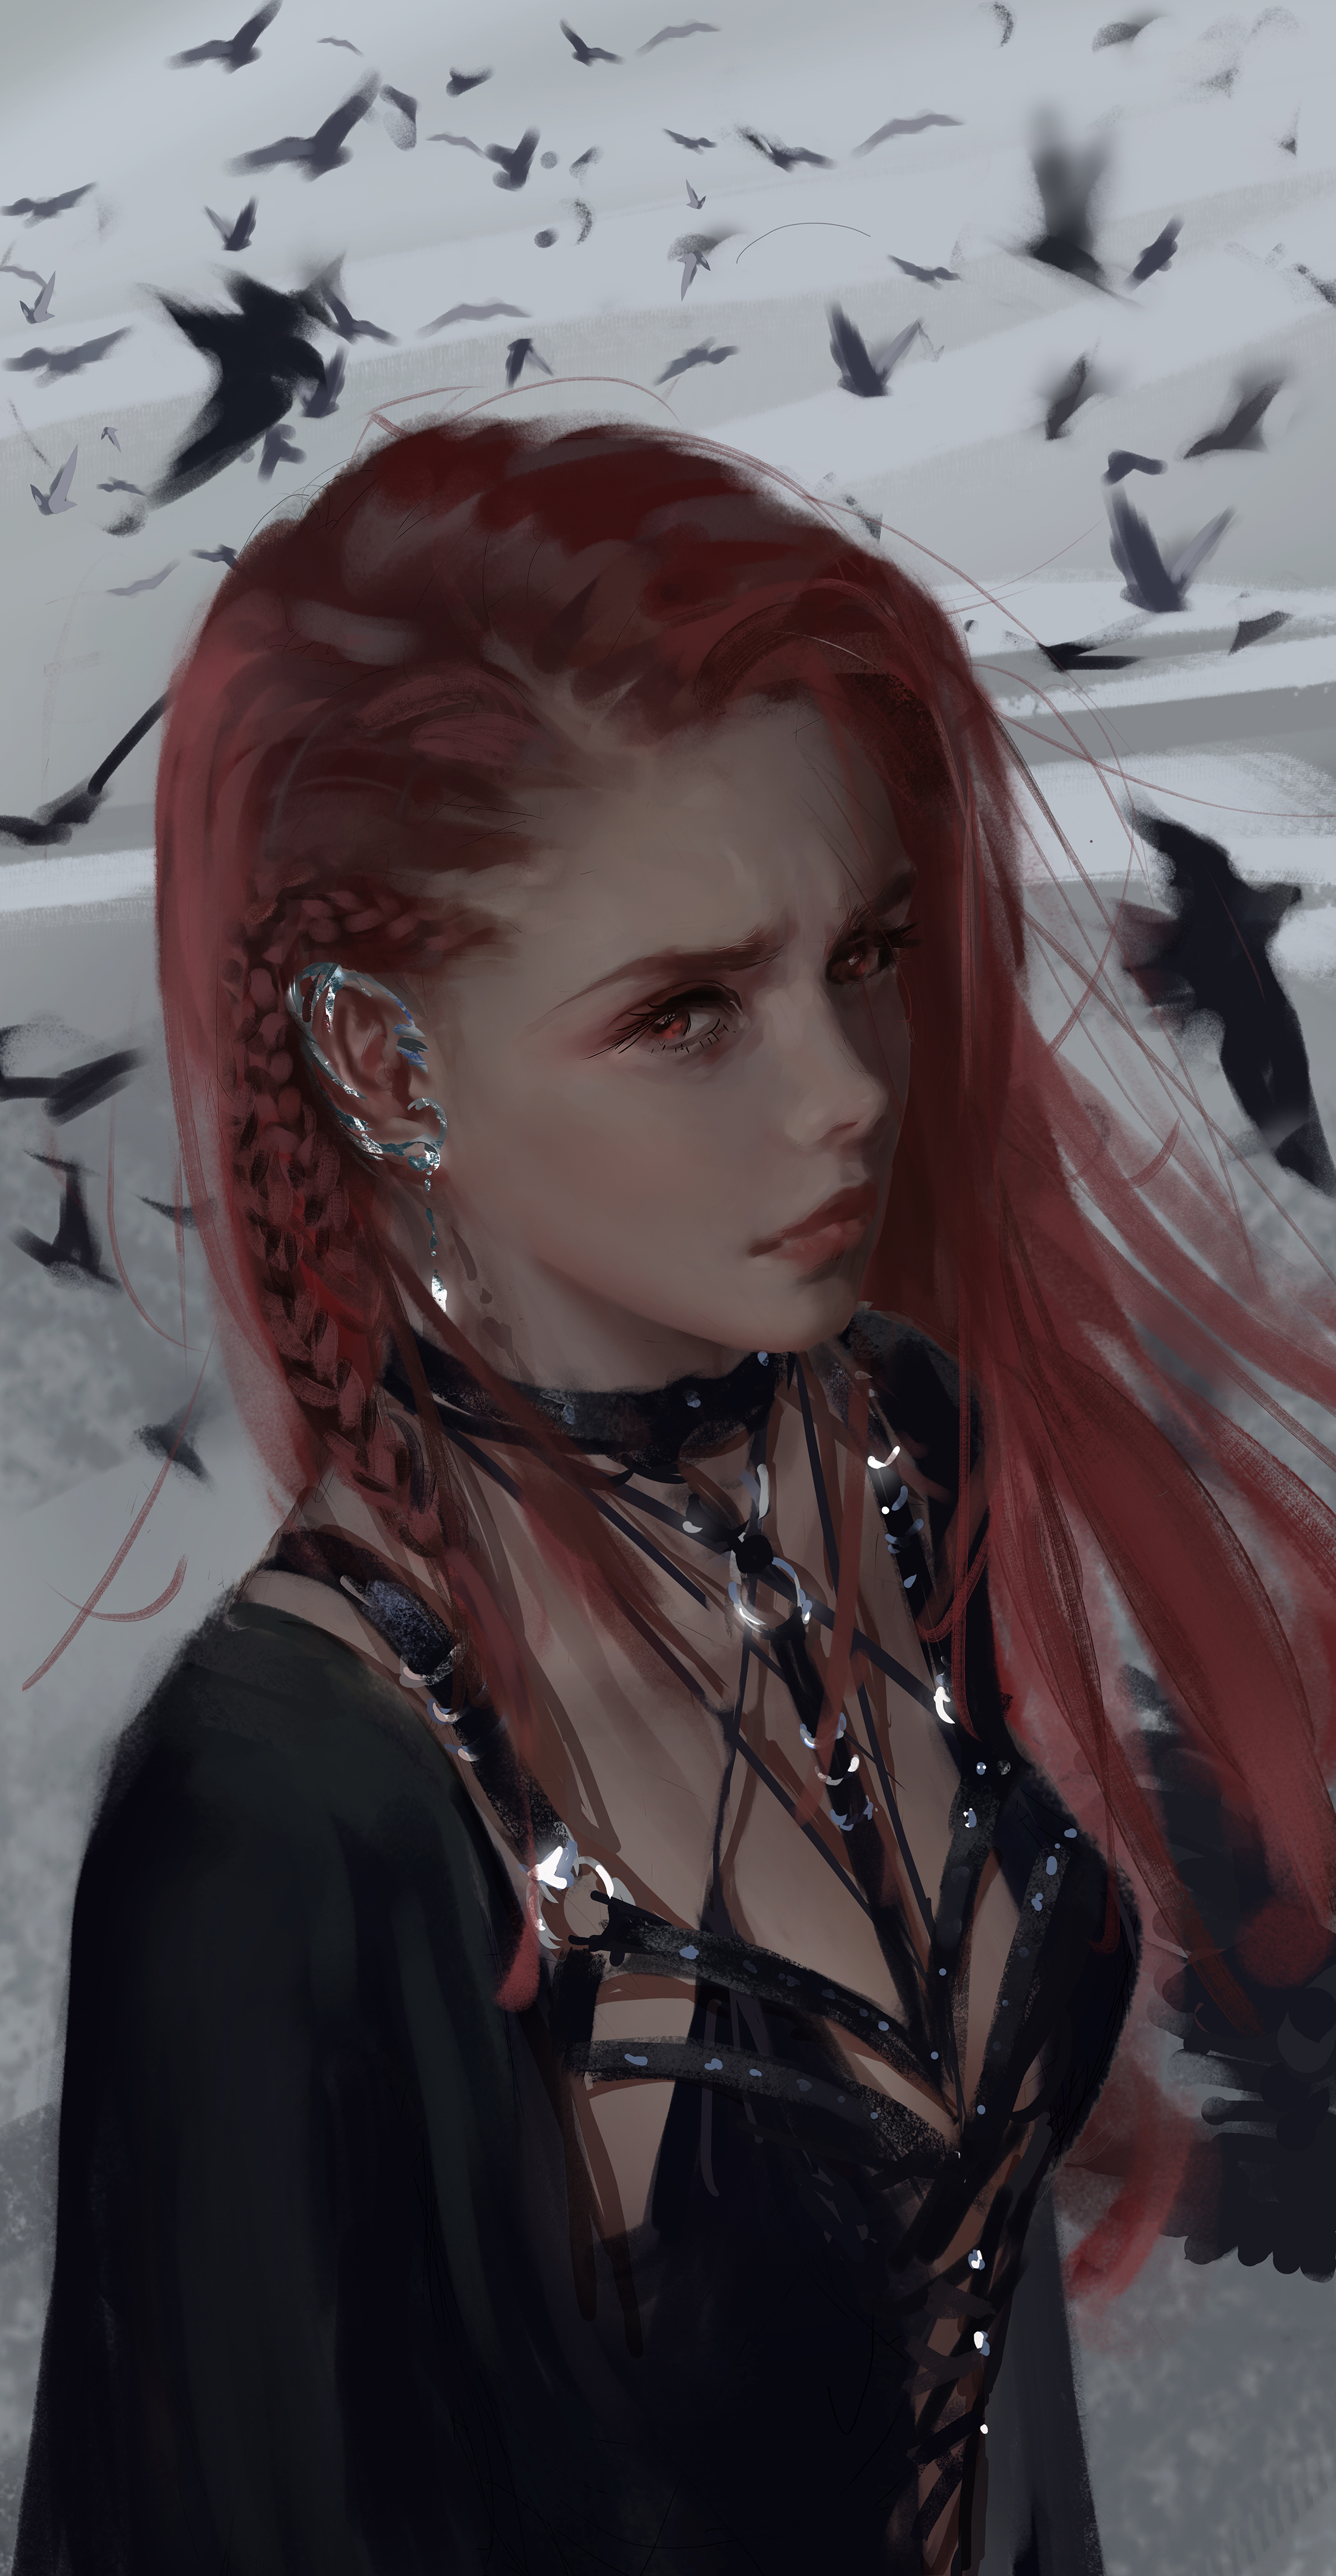 Anime 2408x4644 WLOP digital art redhead crow fantasy girl birds face women